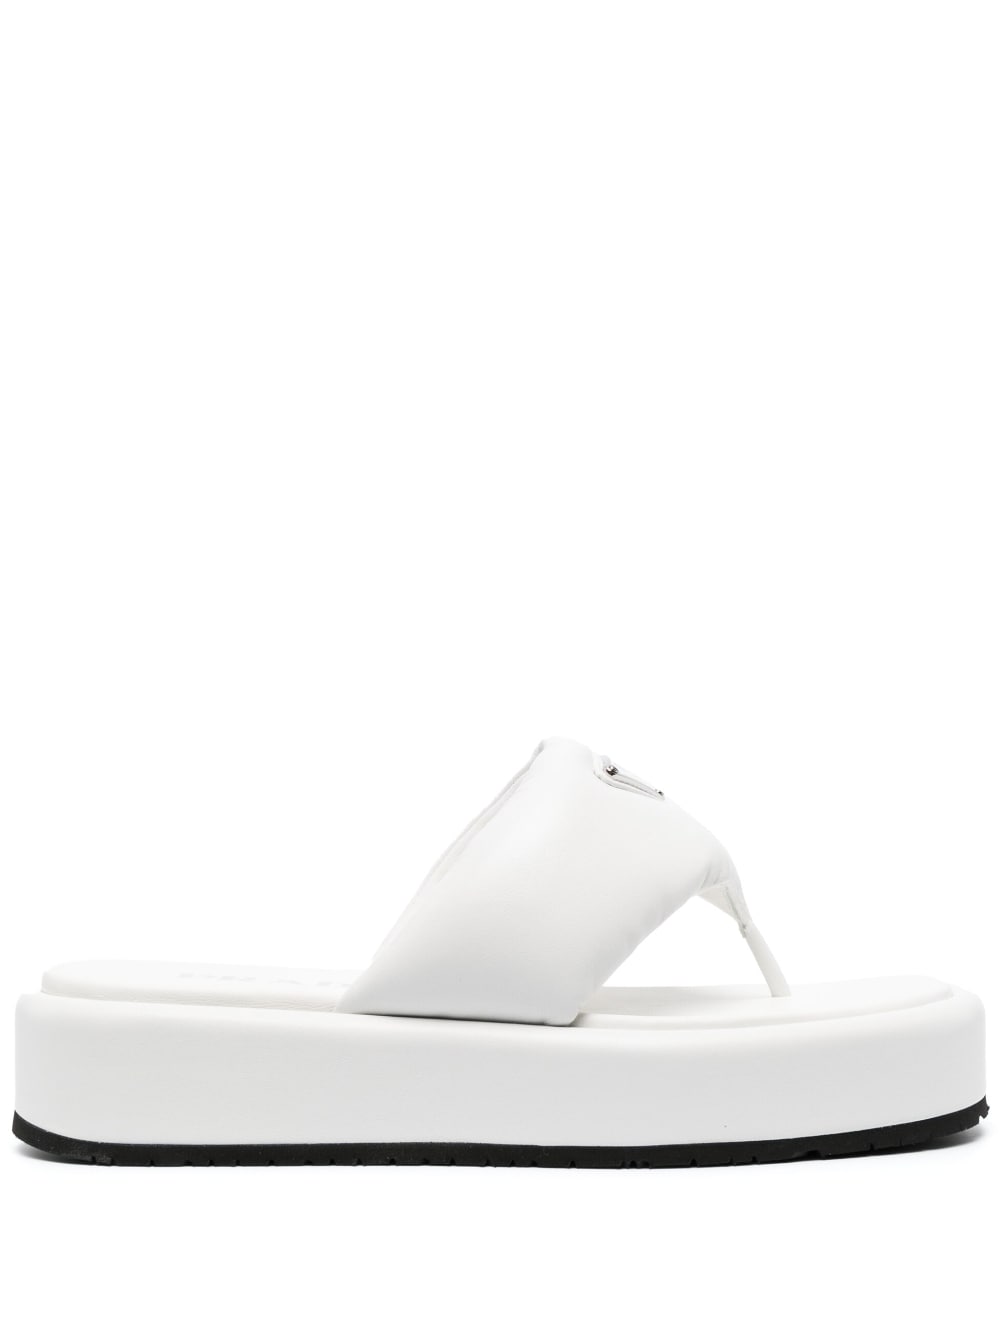 Prada Soft padded nappa leather sandals - White